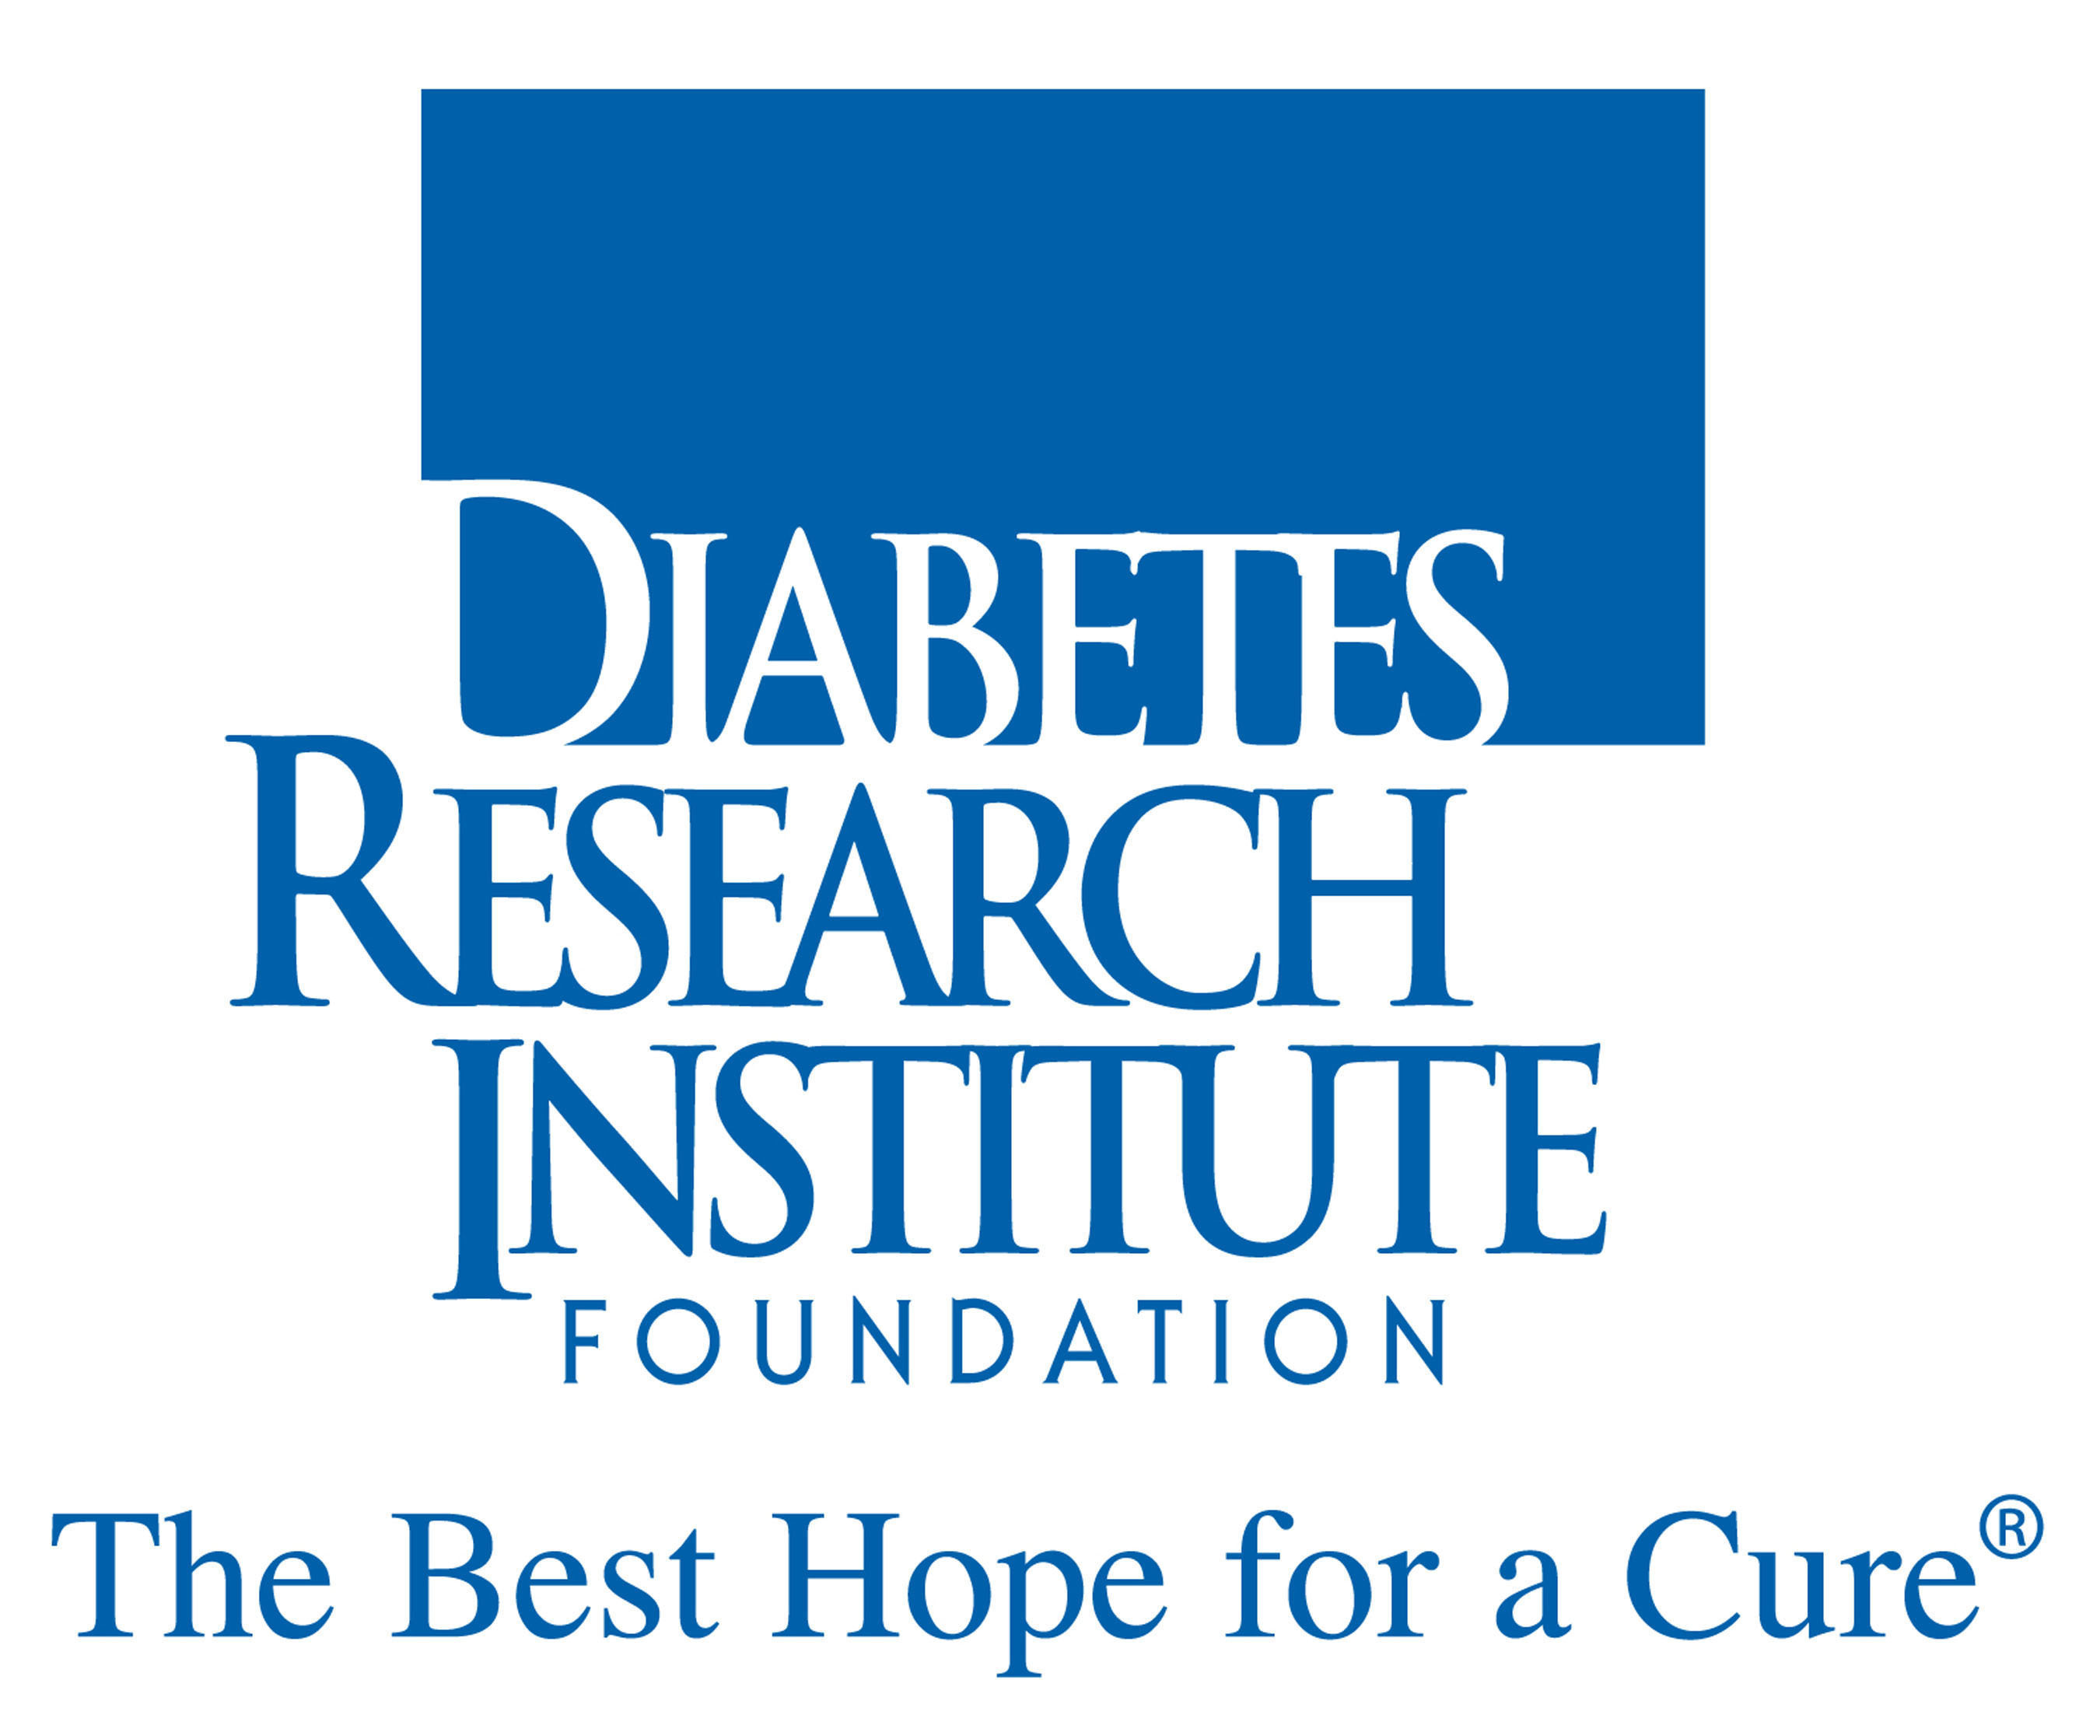 Diabetes Research Institute logo.